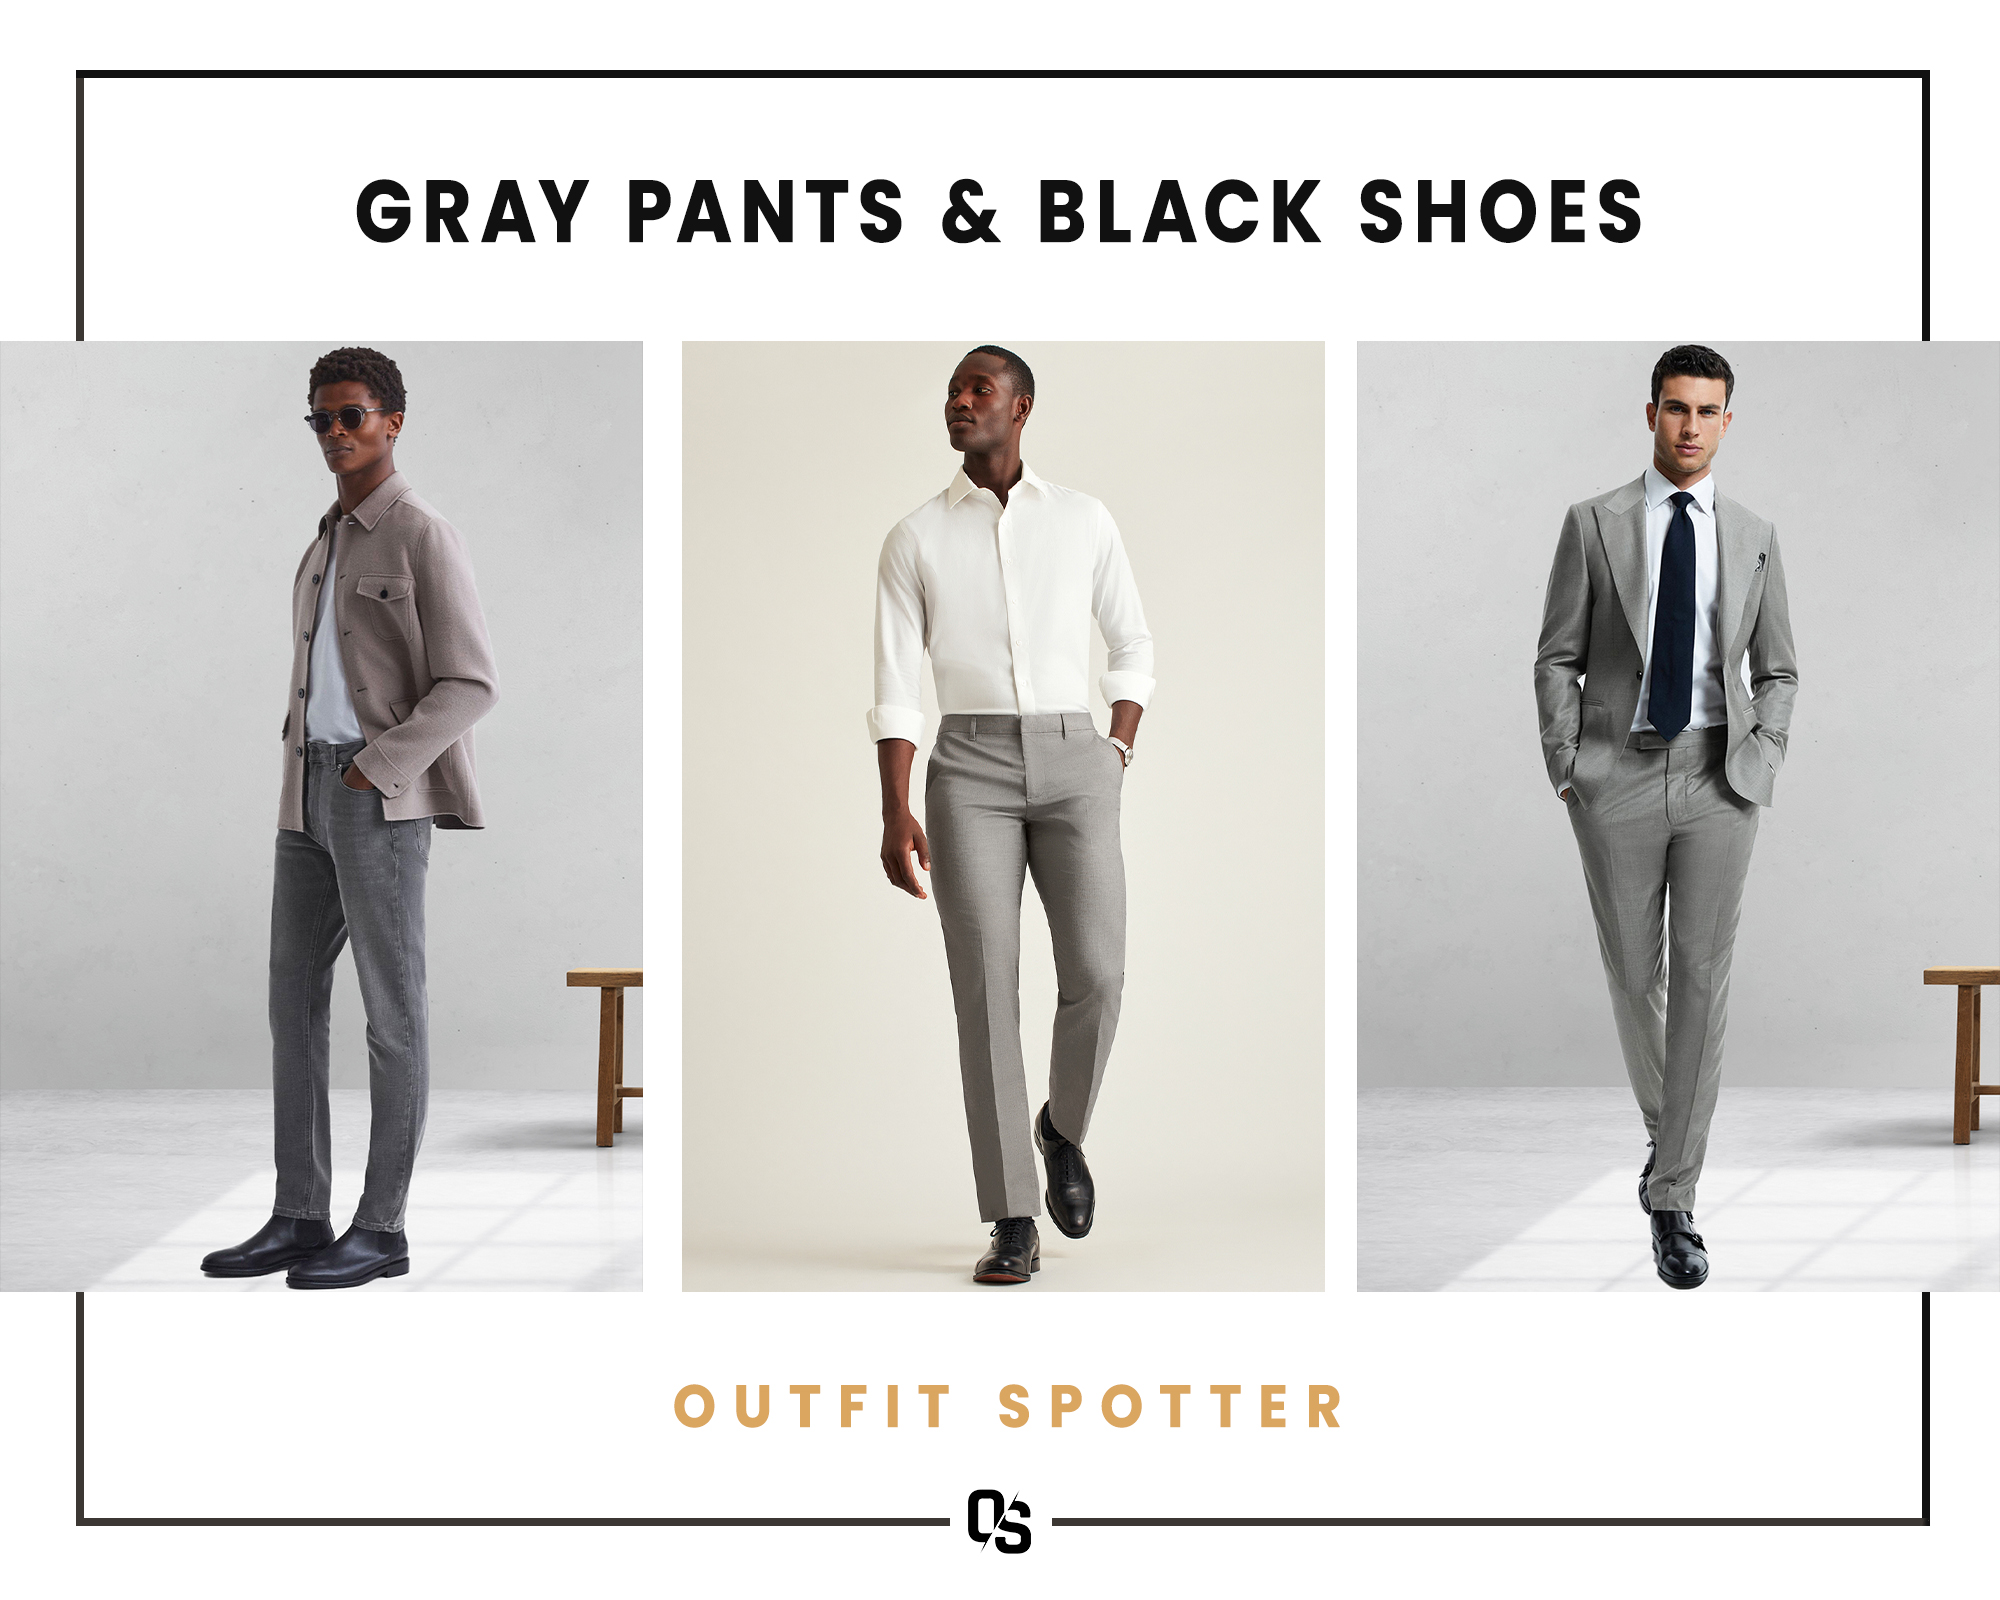 Men's Corduroy Pants Wardrobe Essentials Office Casual Style